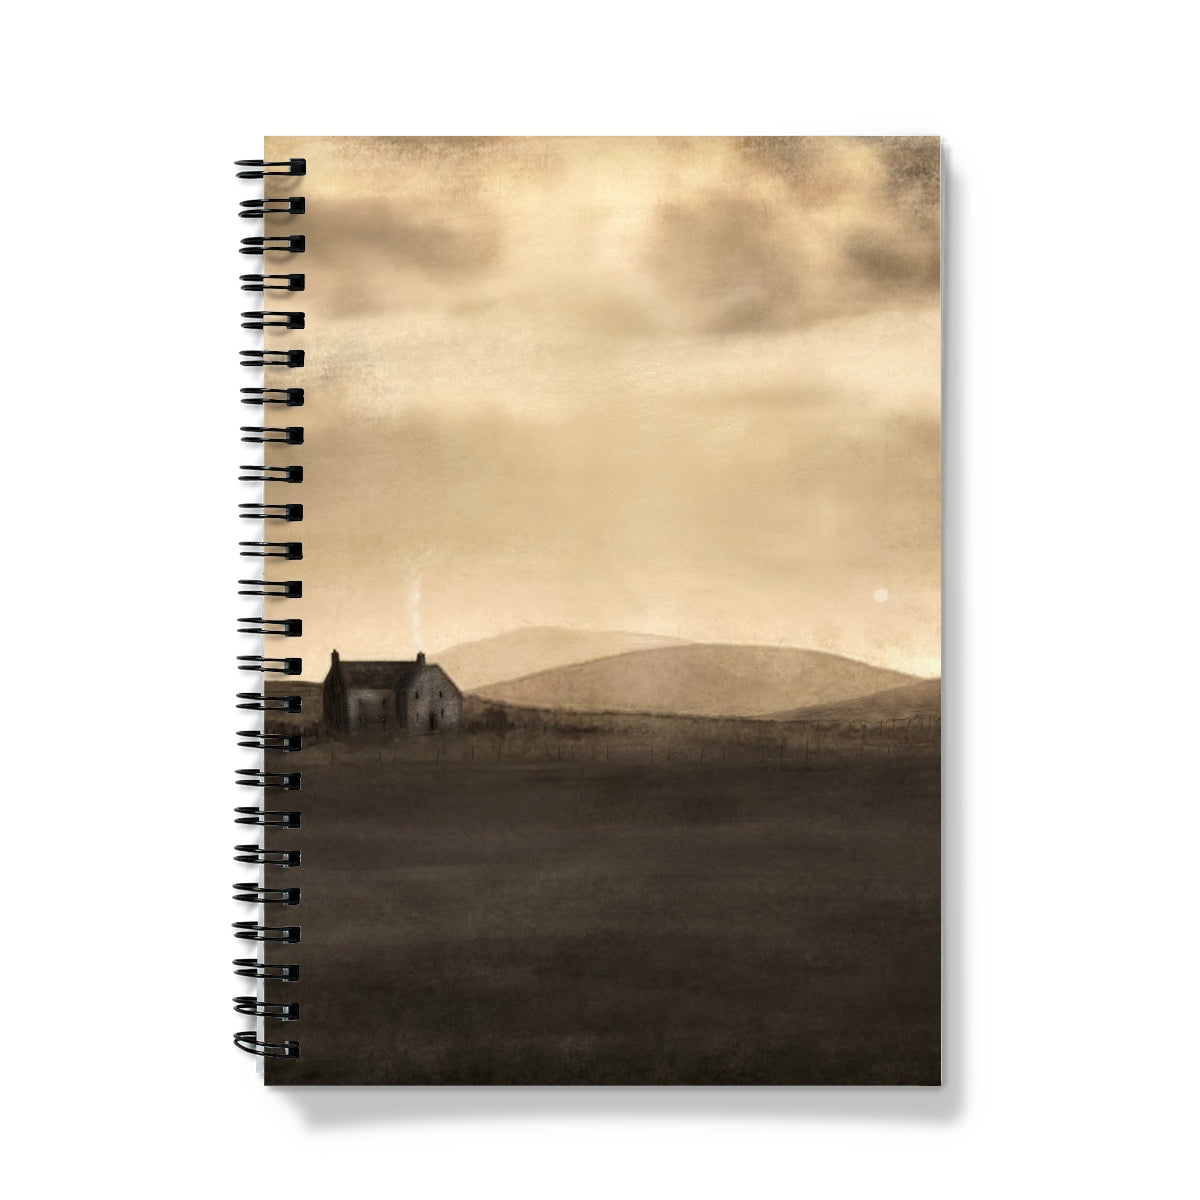 A Moonlit Croft Art Gifts Notebook-Journals & Notebooks-Hebridean Islands Art Gallery-A5-Graph-Paintings, Prints, Homeware, Art Gifts From Scotland By Scottish Artist Kevin Hunter